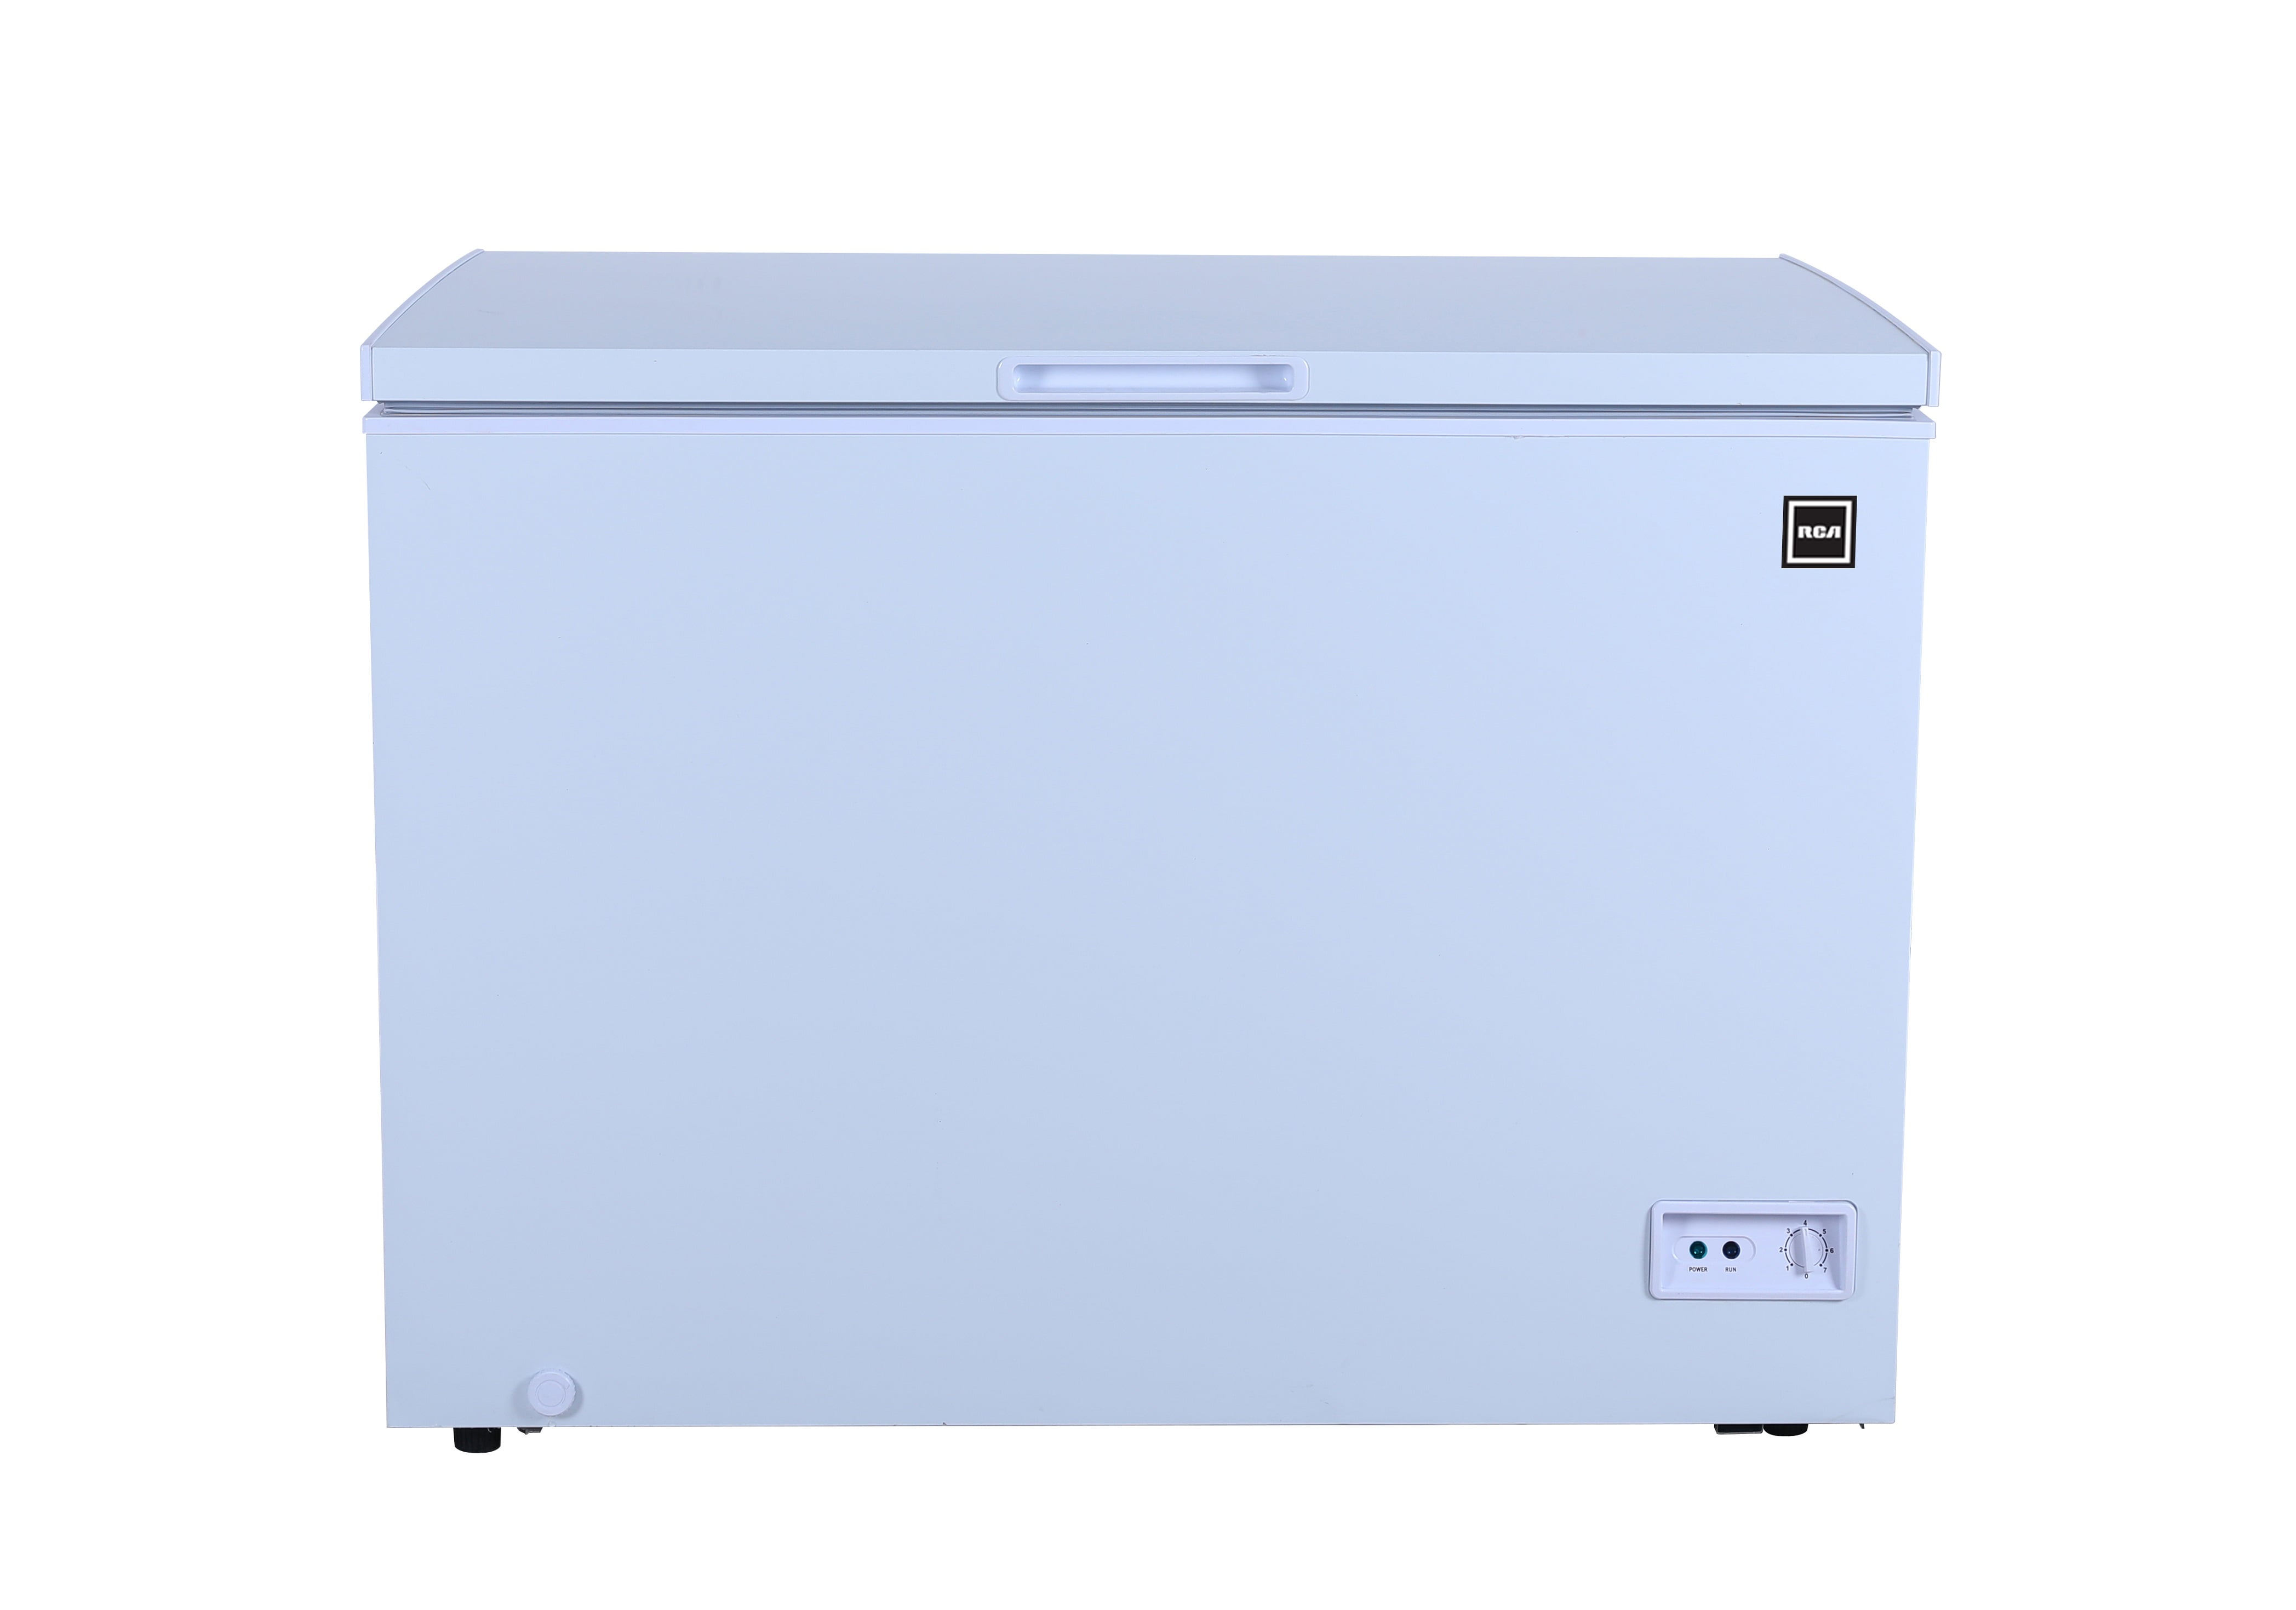  Commercial Freezer Chest freezer 10 Cuft NSF Restaurant 44  White Stand Alone Solid Flat Top w/Storage Baskets XF-302 : Appliances